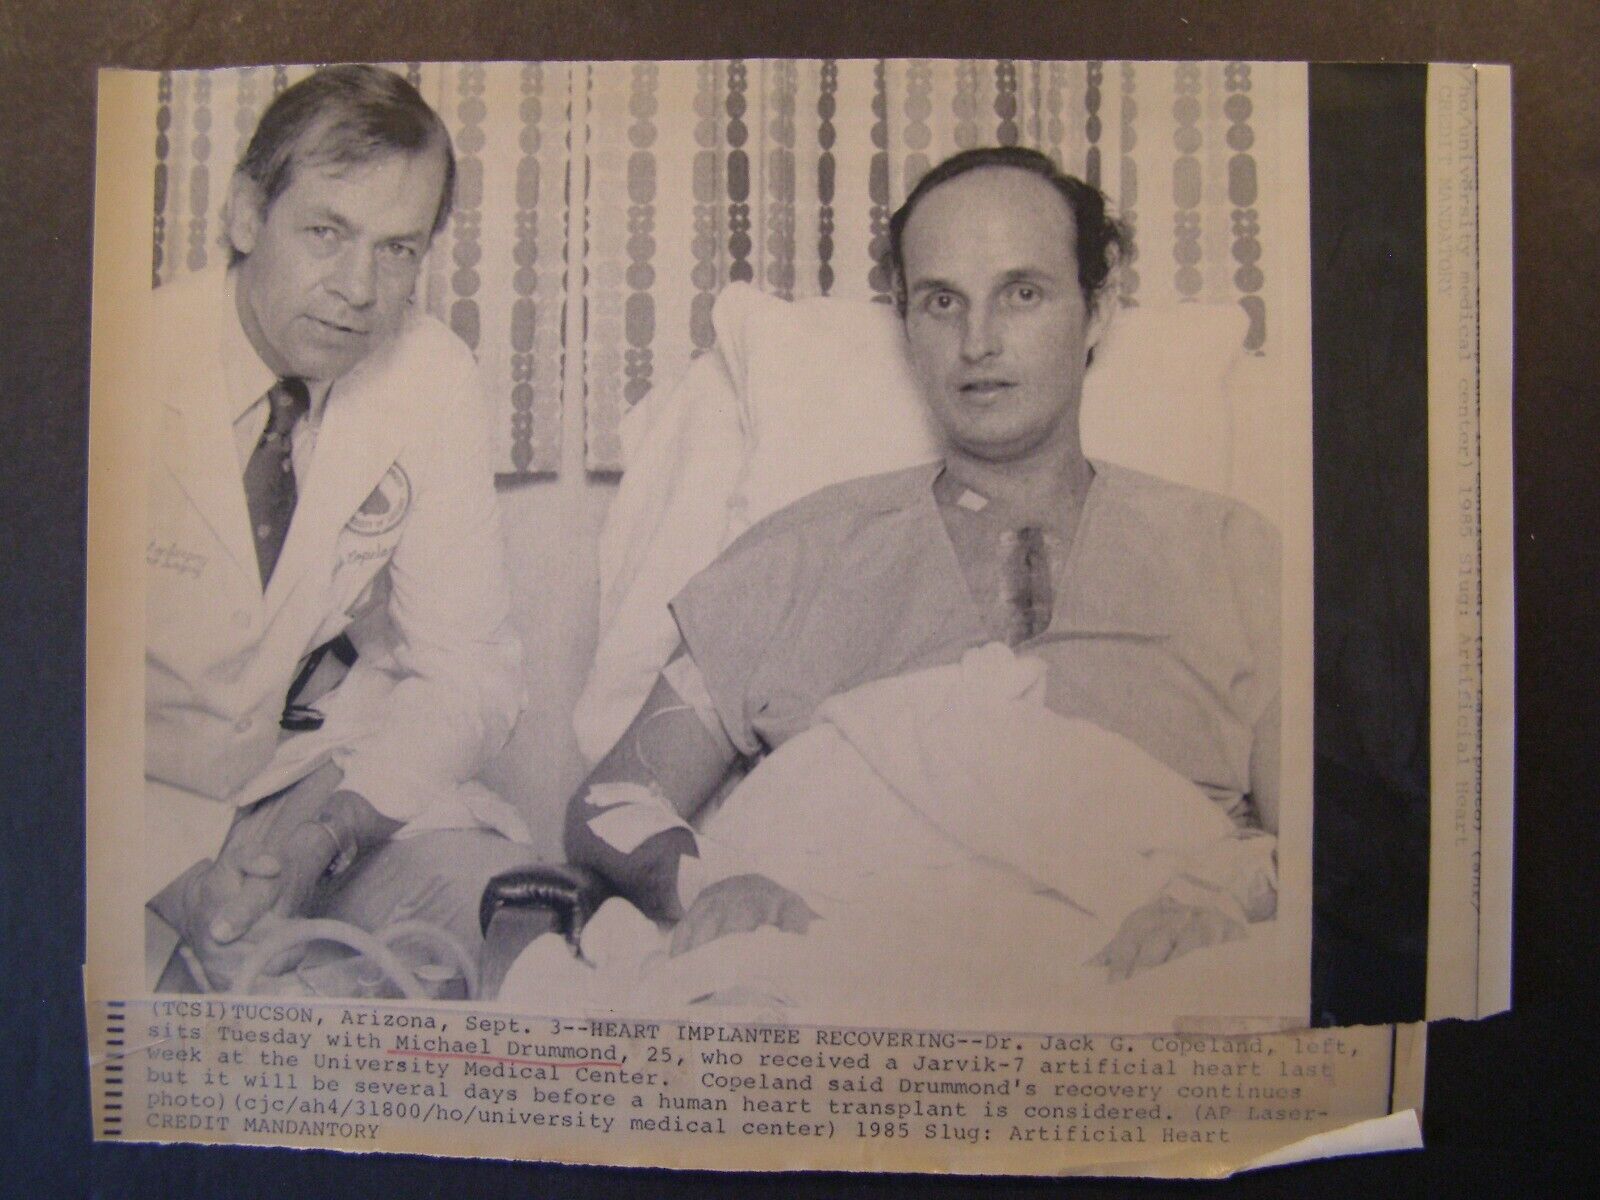 AP Wire Press Photo 1985 Artificial Heart Recipient Michael Drummond recovering 